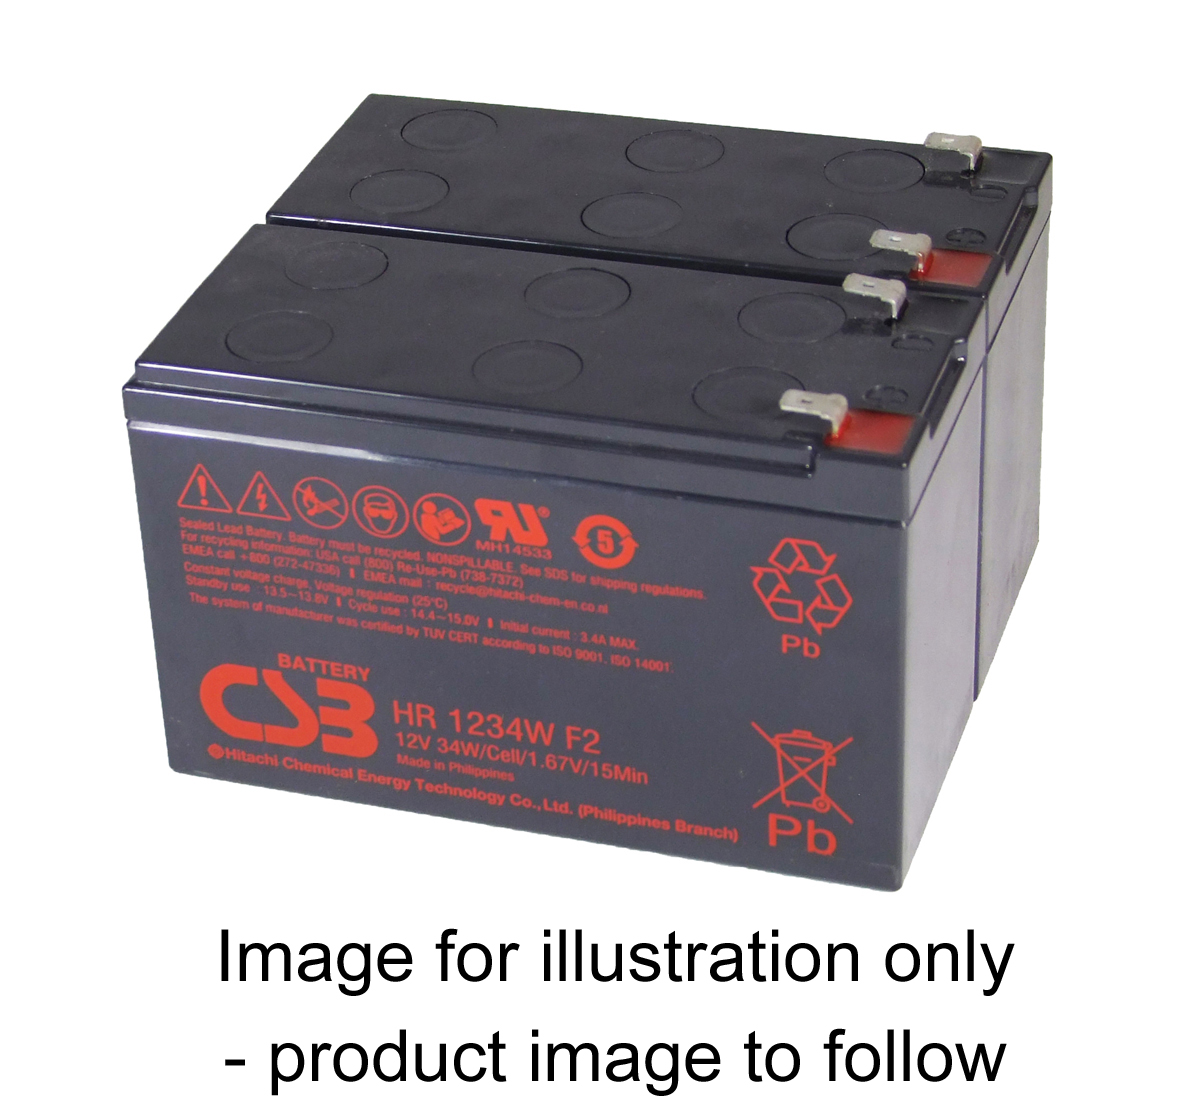 MDSV209 UPS Battery Kit - Replaces APC RBCV209